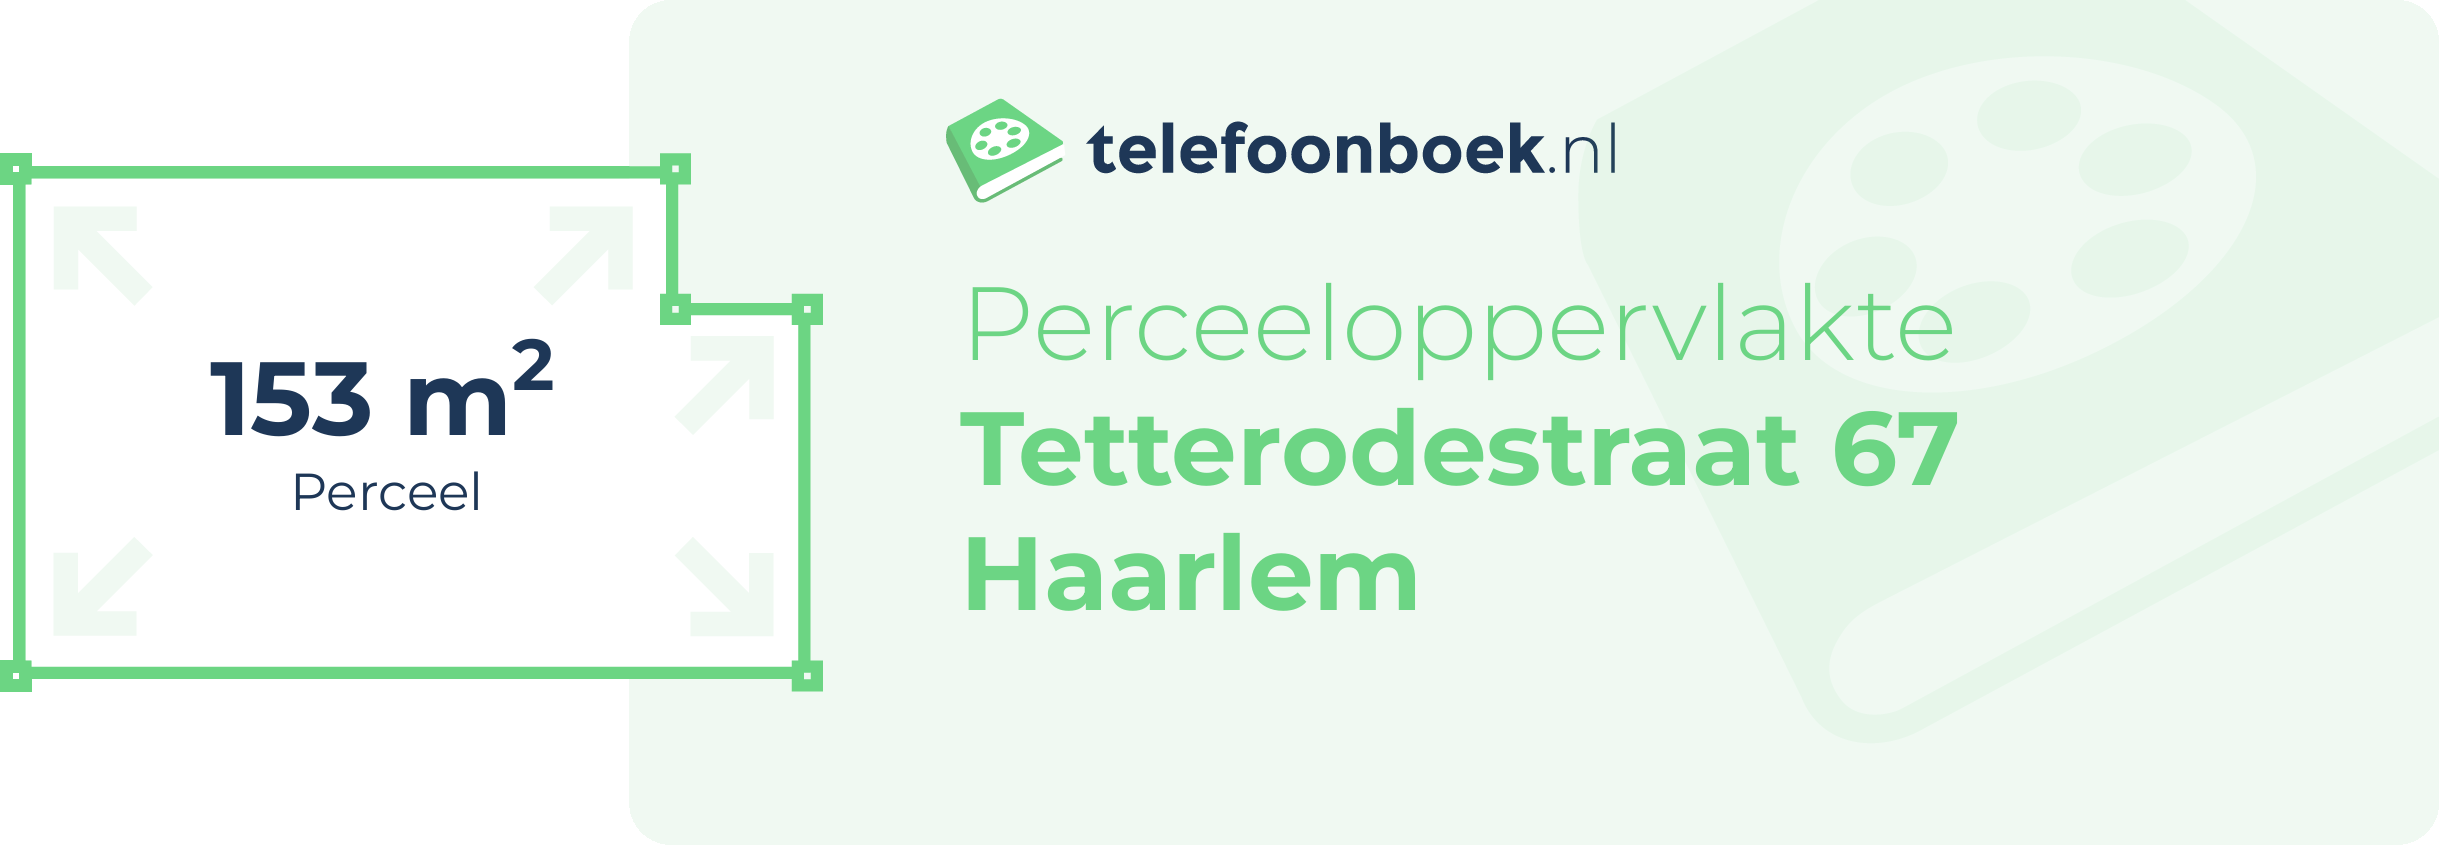 Perceeloppervlakte Tetterodestraat 67 Haarlem